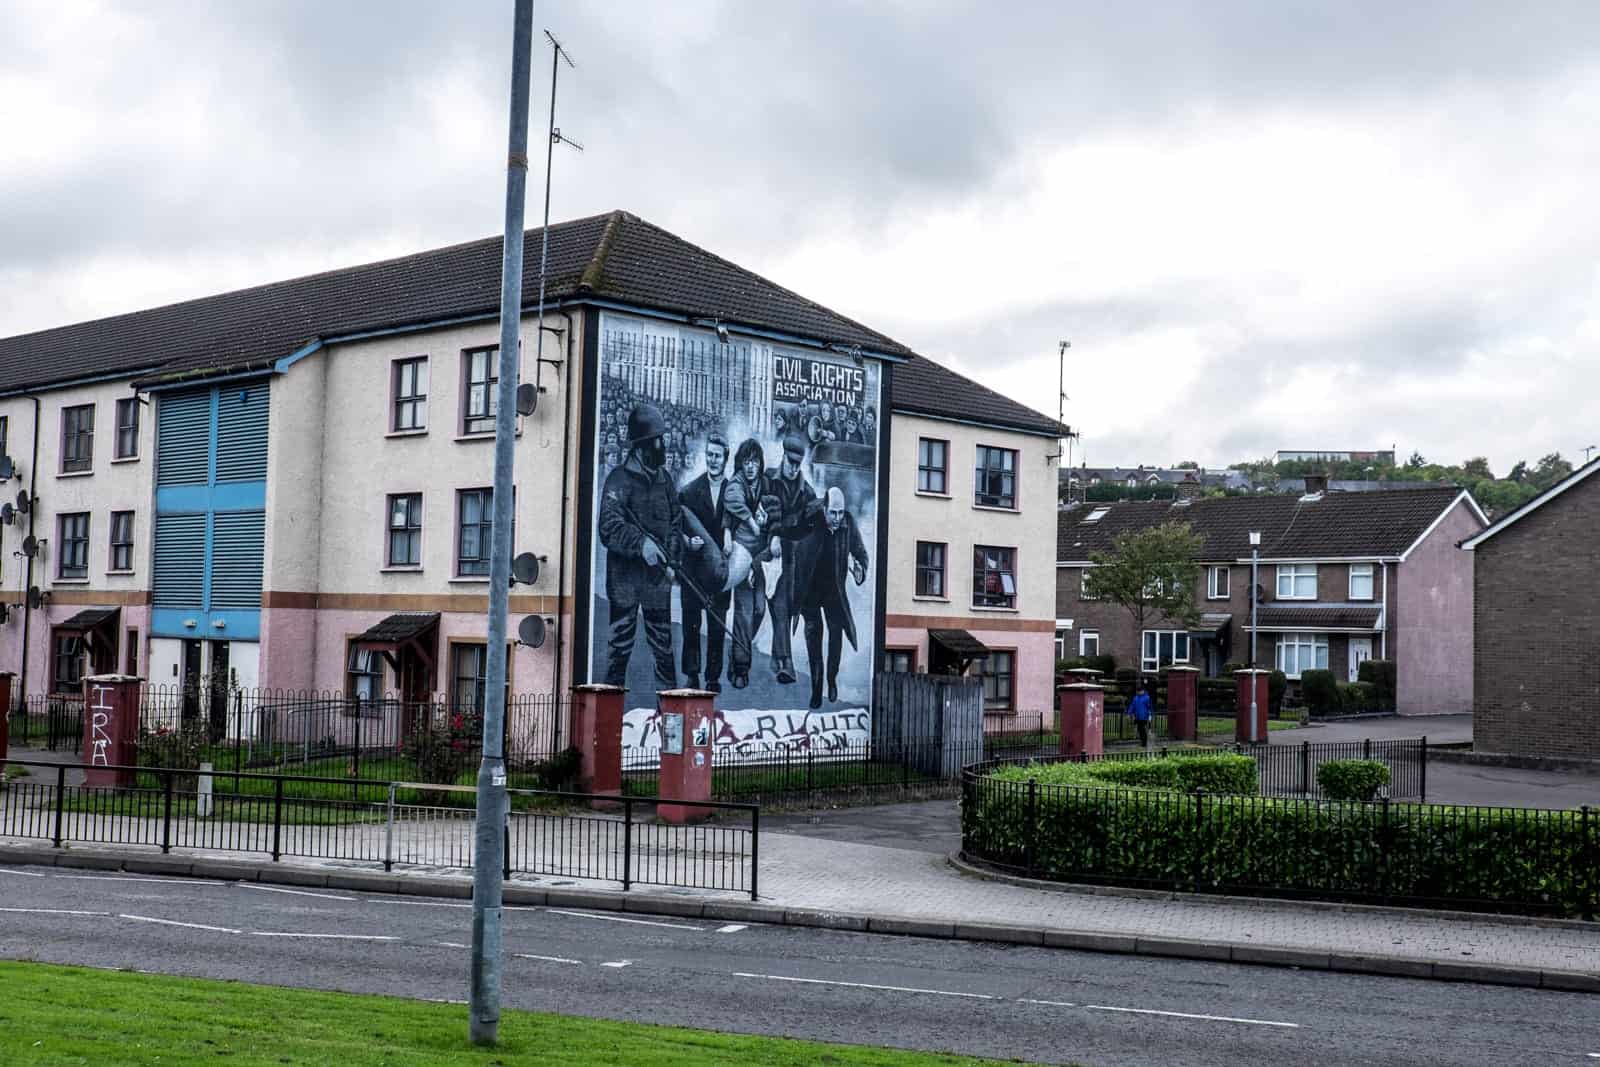 Derry Murals People's Gallery in the Bogside, Londonderry, Northern Ireland